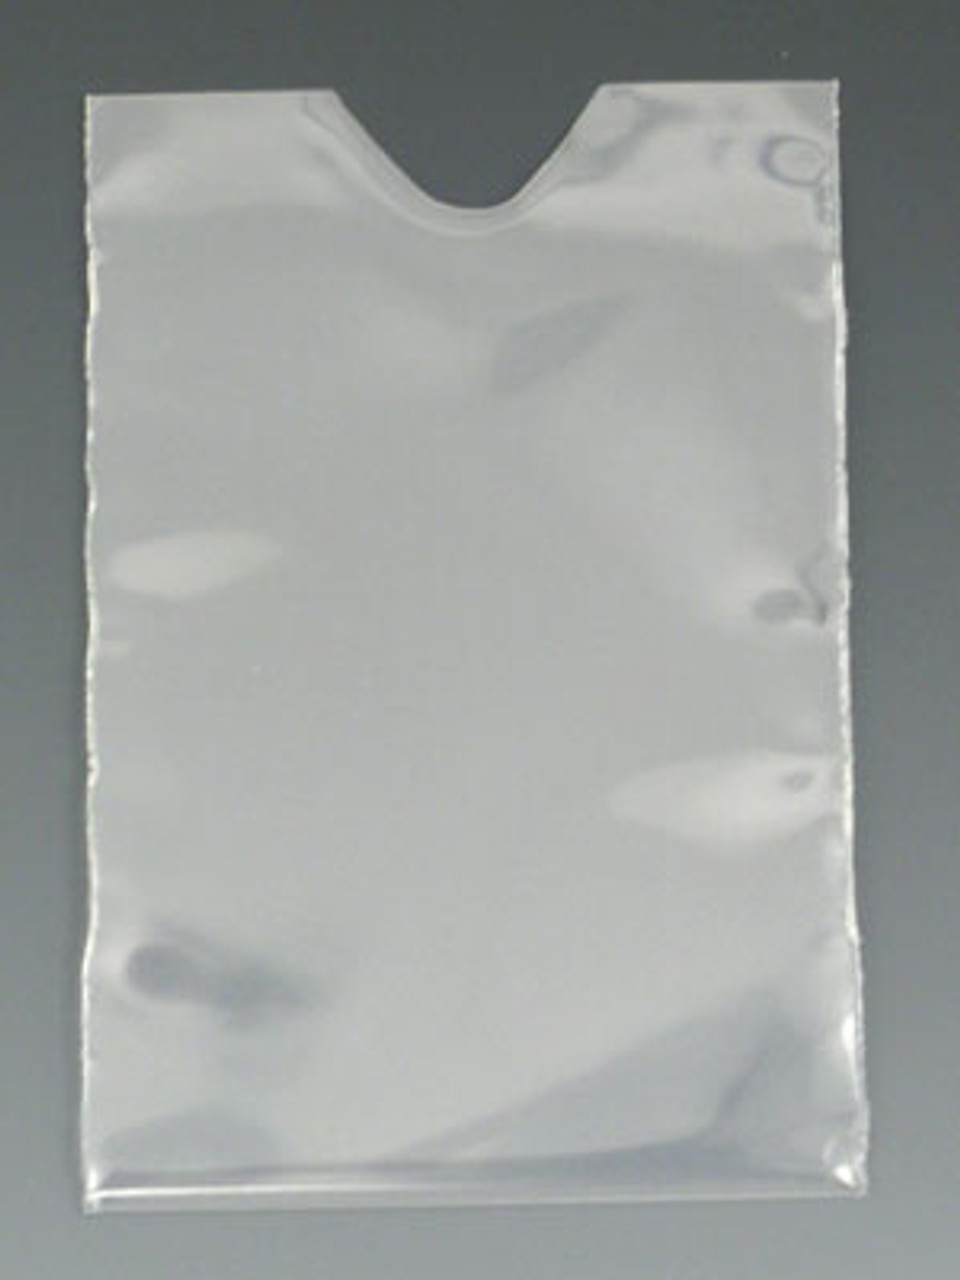 Polyethylene Passbook Jacket with Thumb Notch (Qty) 1000 Items